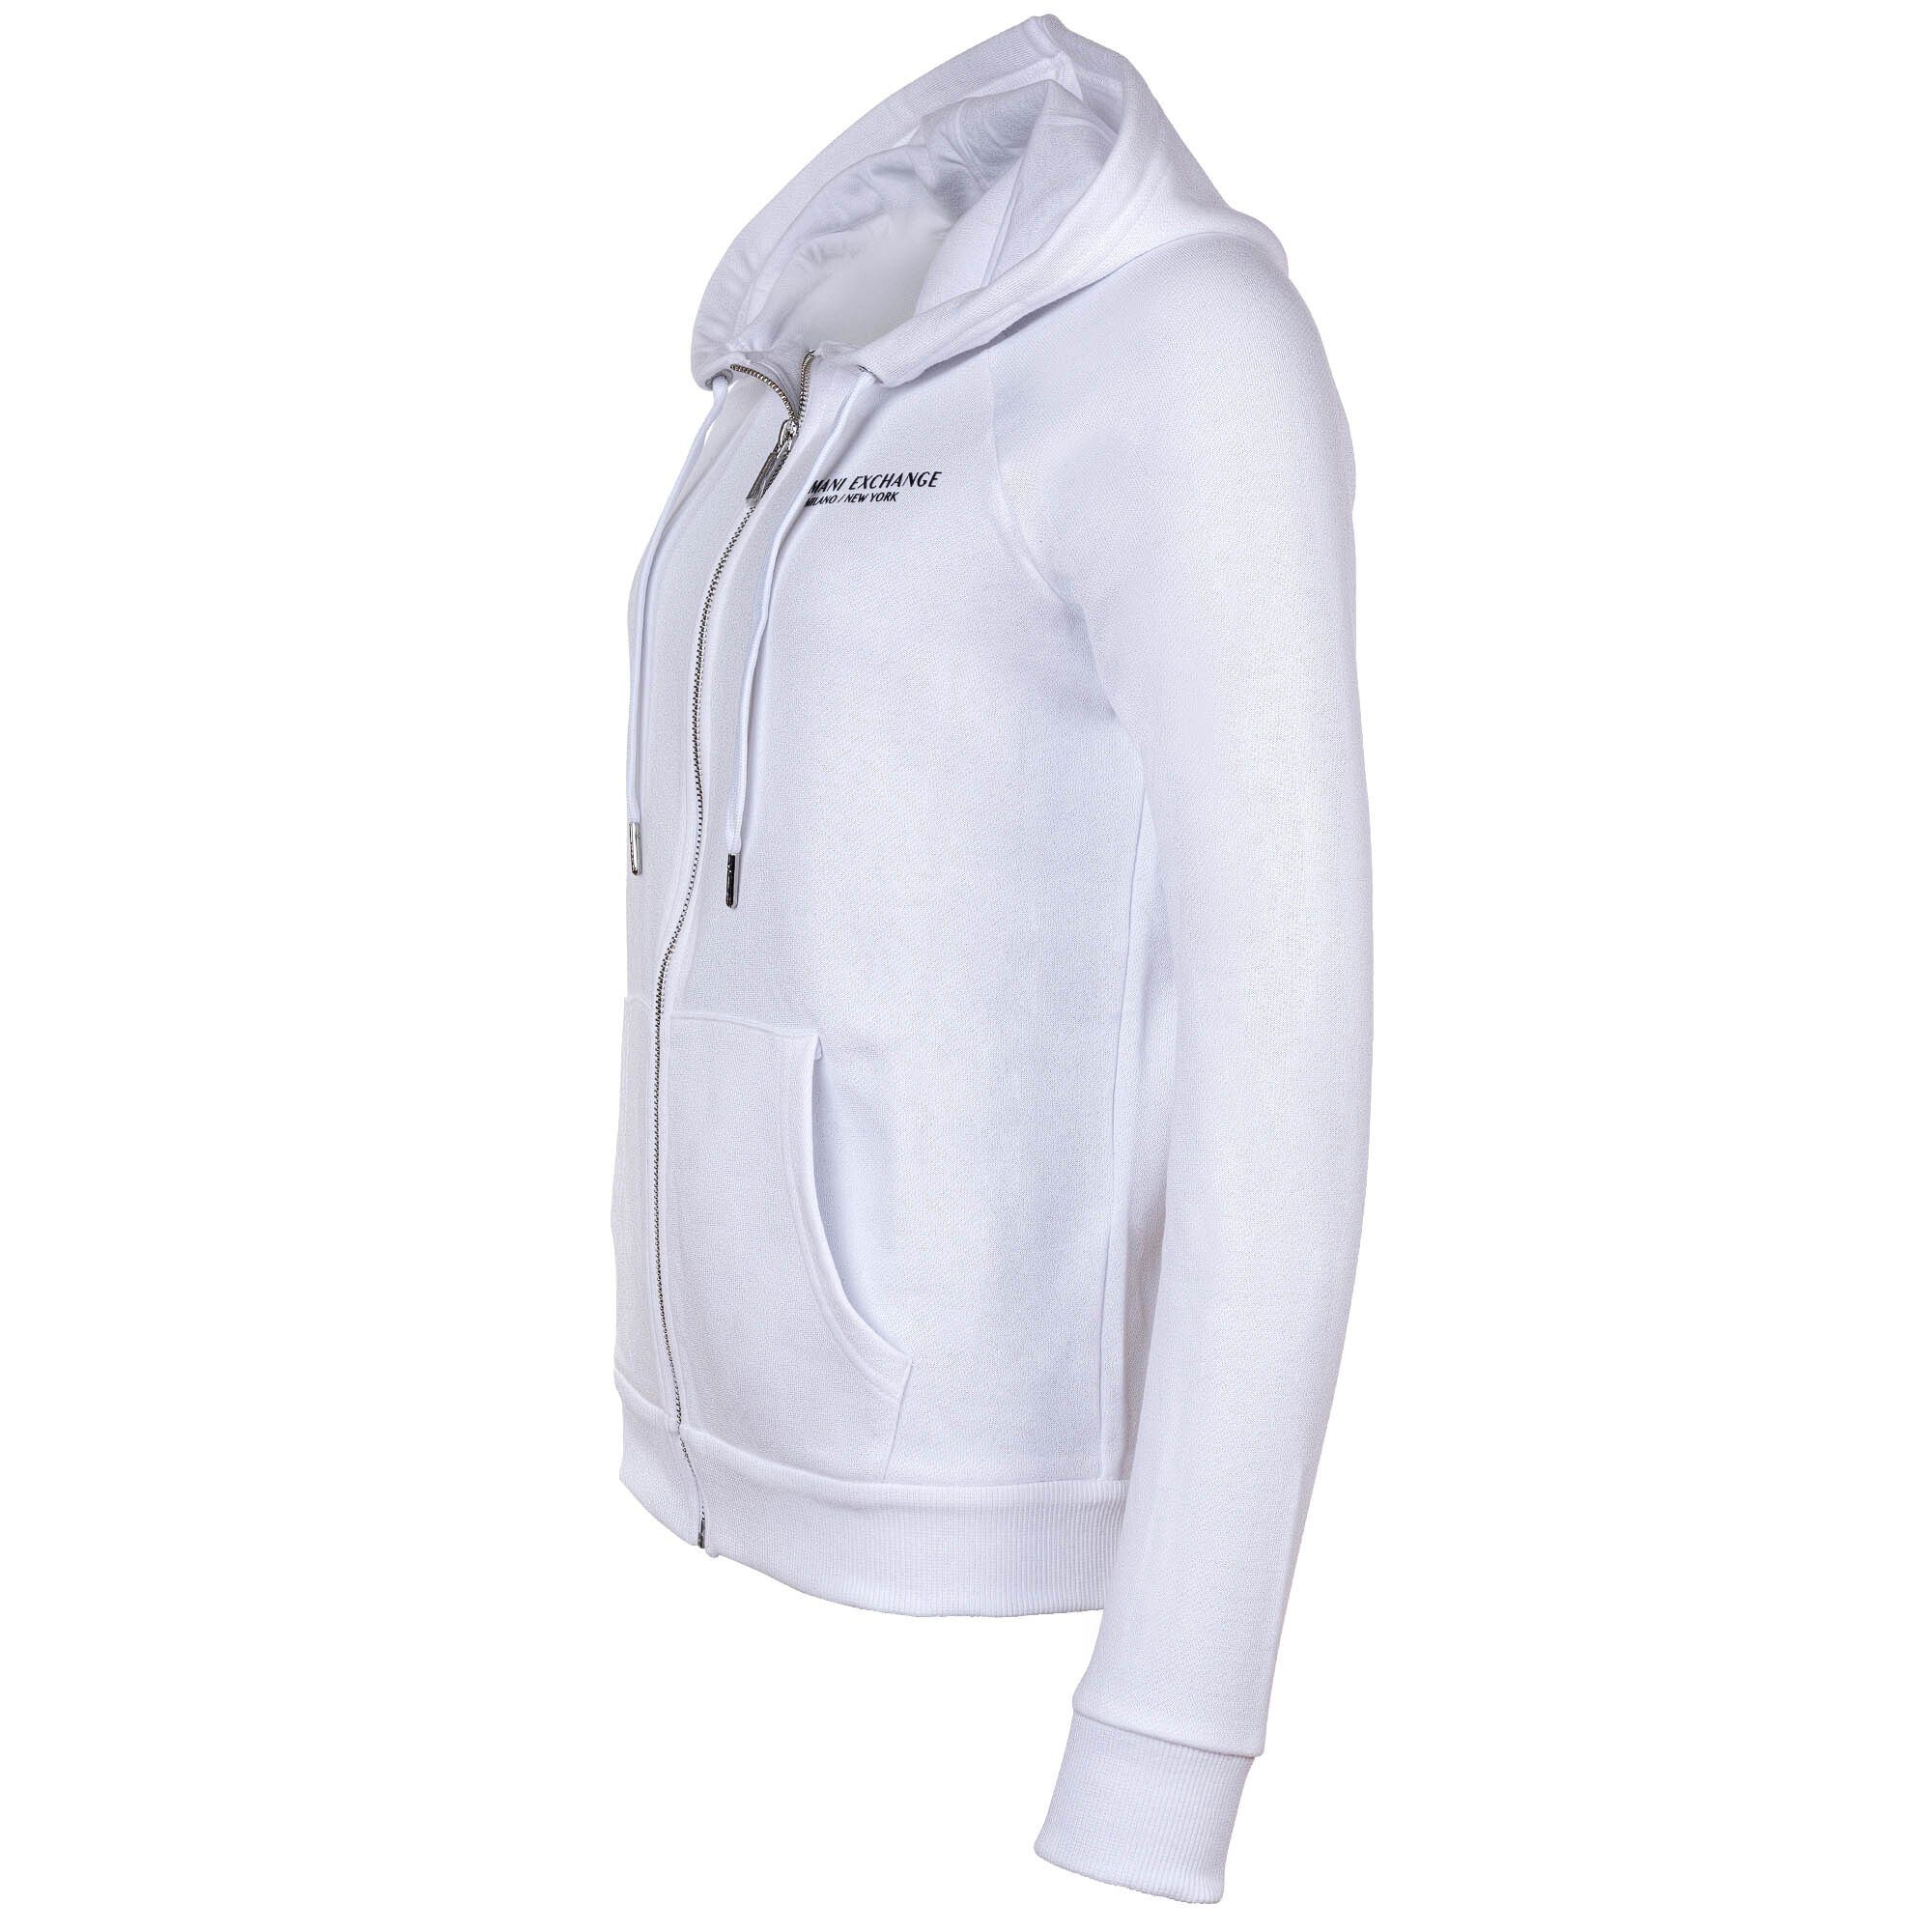 ARMANI EXCHANGE Reißverschluss, Sweater Damen Weiß Logo Sweatjacke - Kapuze